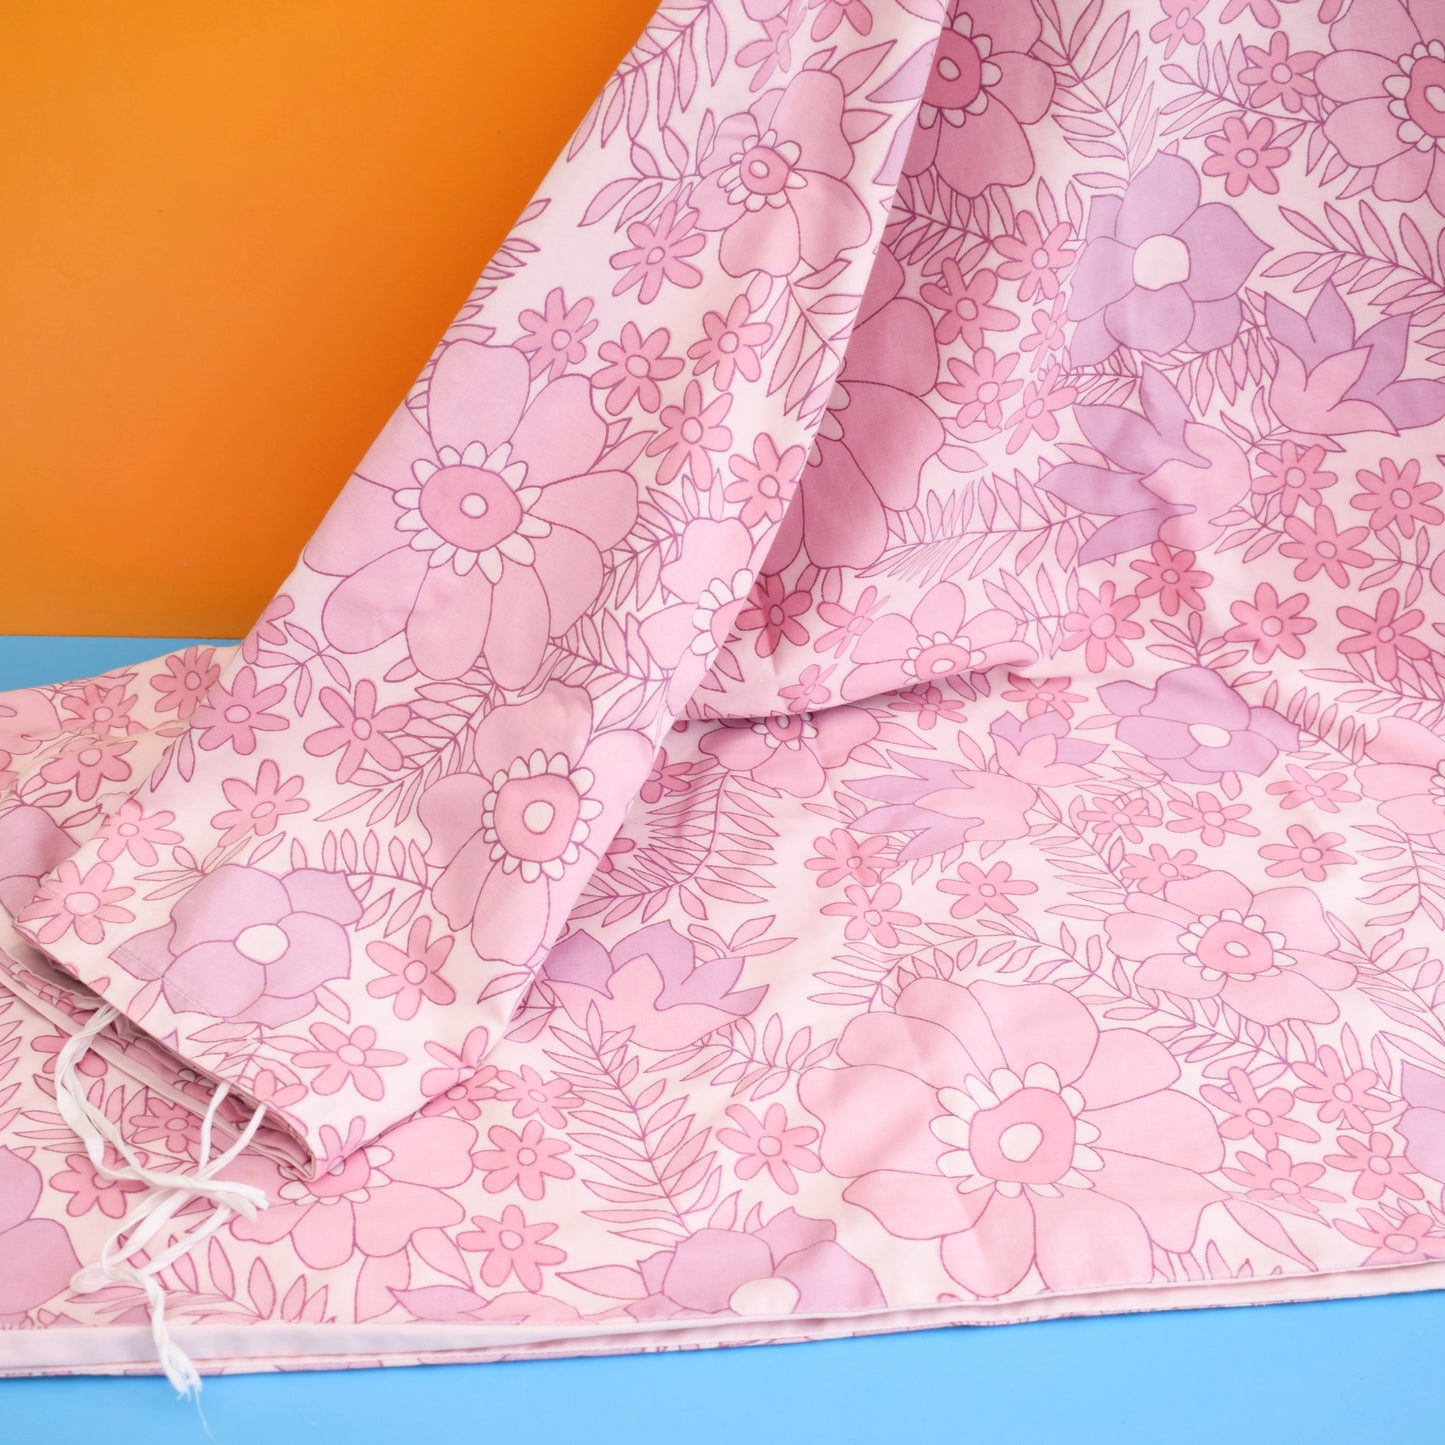 Vintage 1960s Duvet Cover / Fabric - Flower Power - Pink